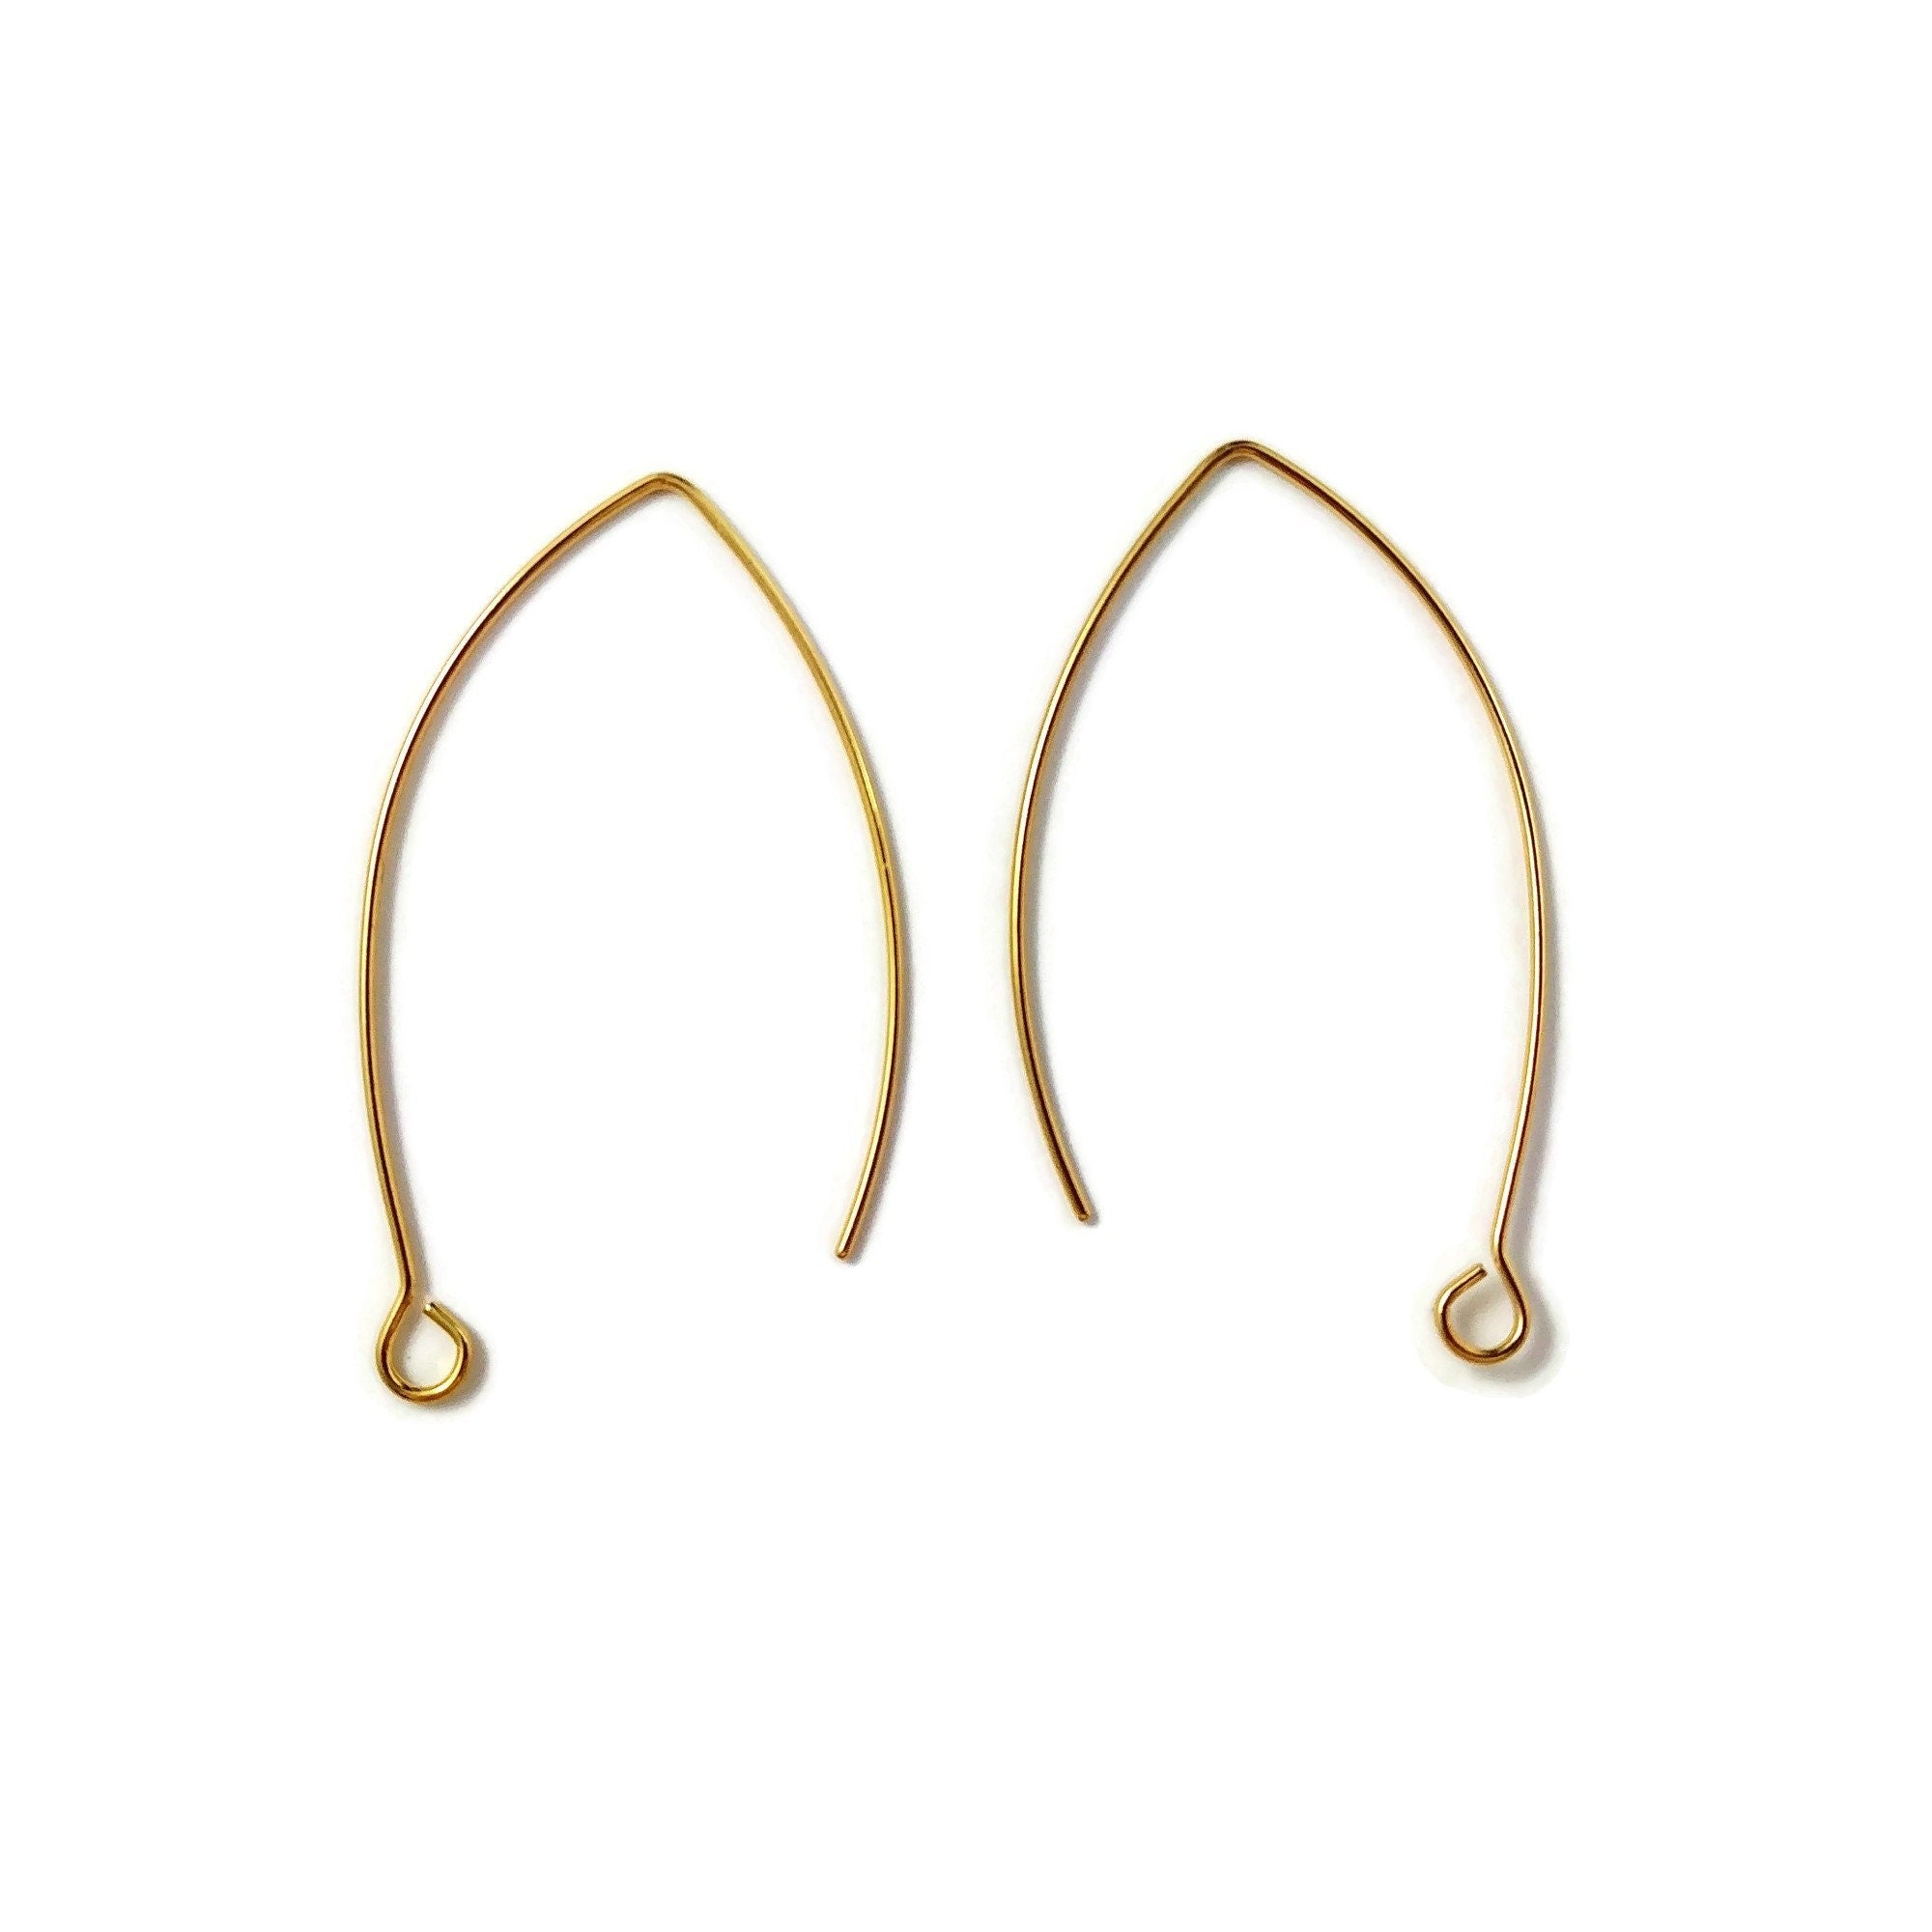 Antique Brass Bronze Fish Hook Earring Findings Ear Wires for Jewelry  Making- Nickel Free (21 Gauge x 20mm)